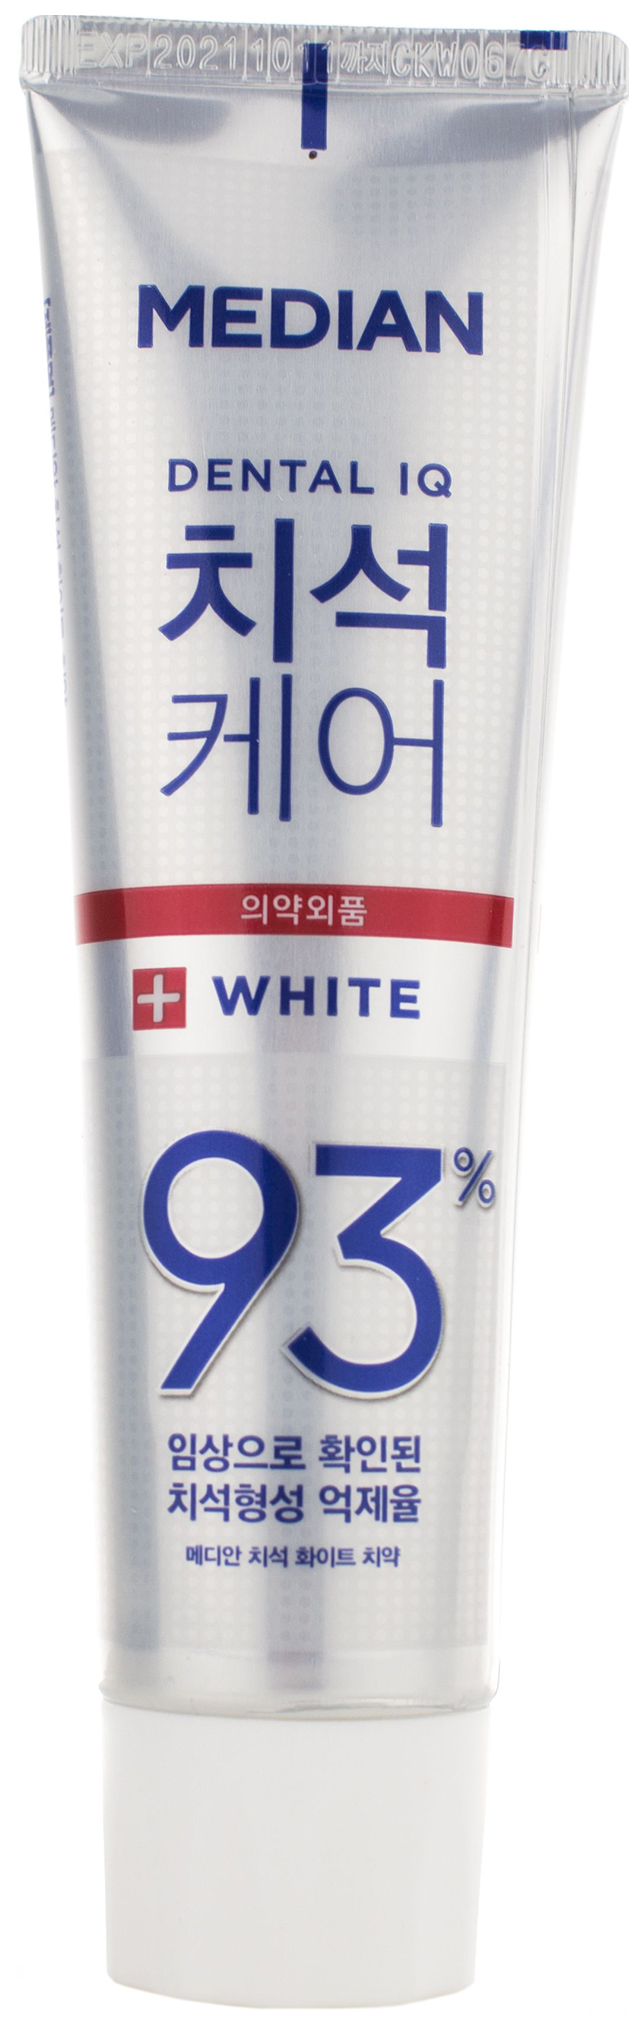 Зубная паста Median Toothpaste White 120 мл зубная паста median toothpaste prevent gingivitis 120 мл